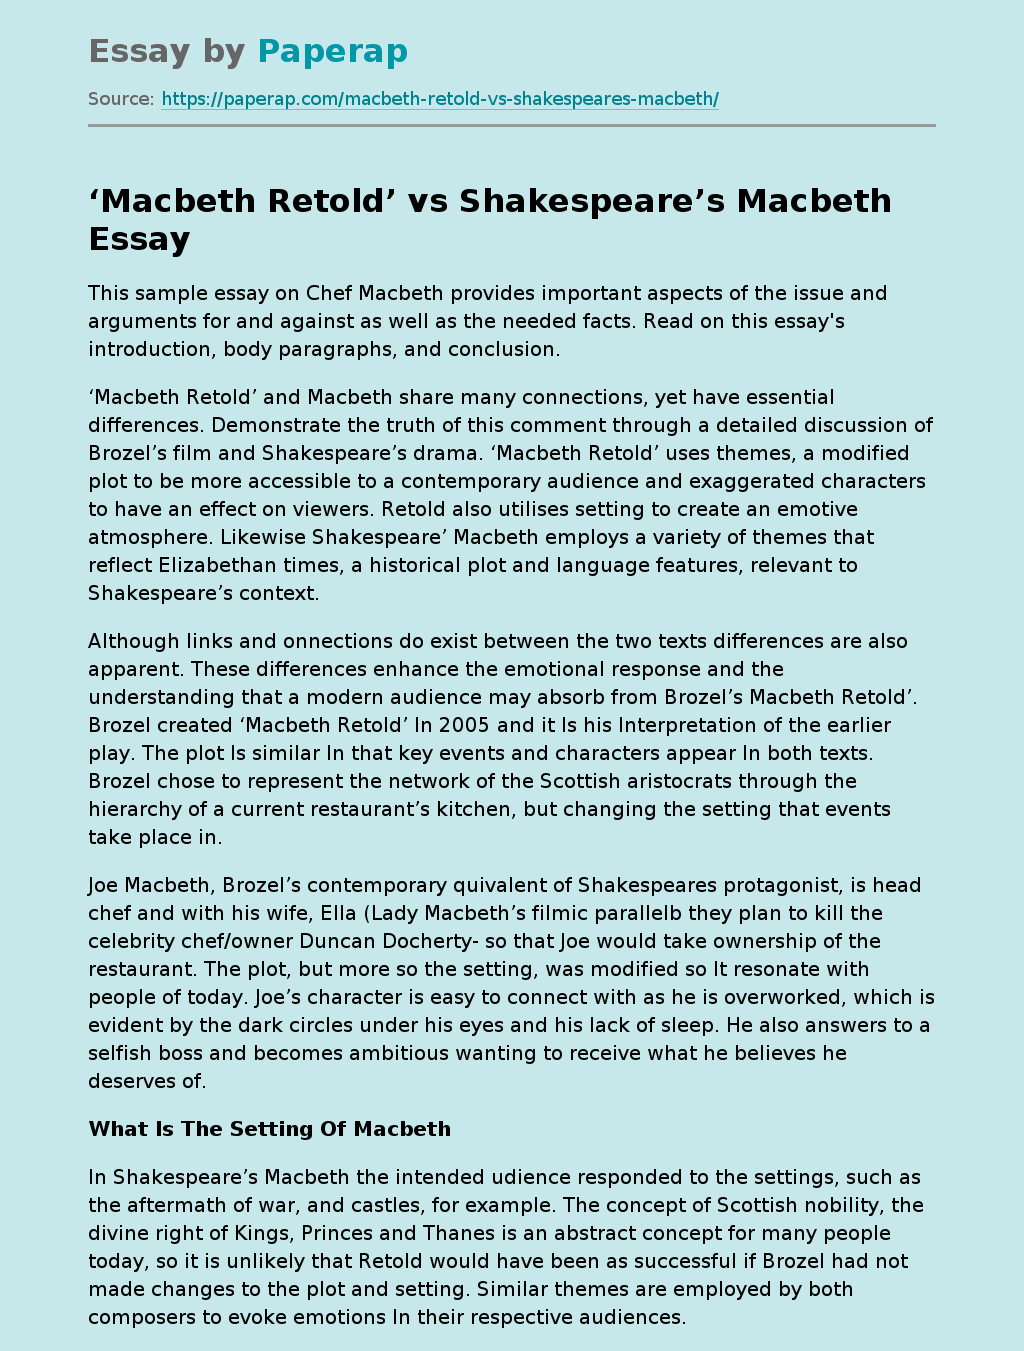 ‘Macbeth Retold’ vs Shakespeare’s Macbeth